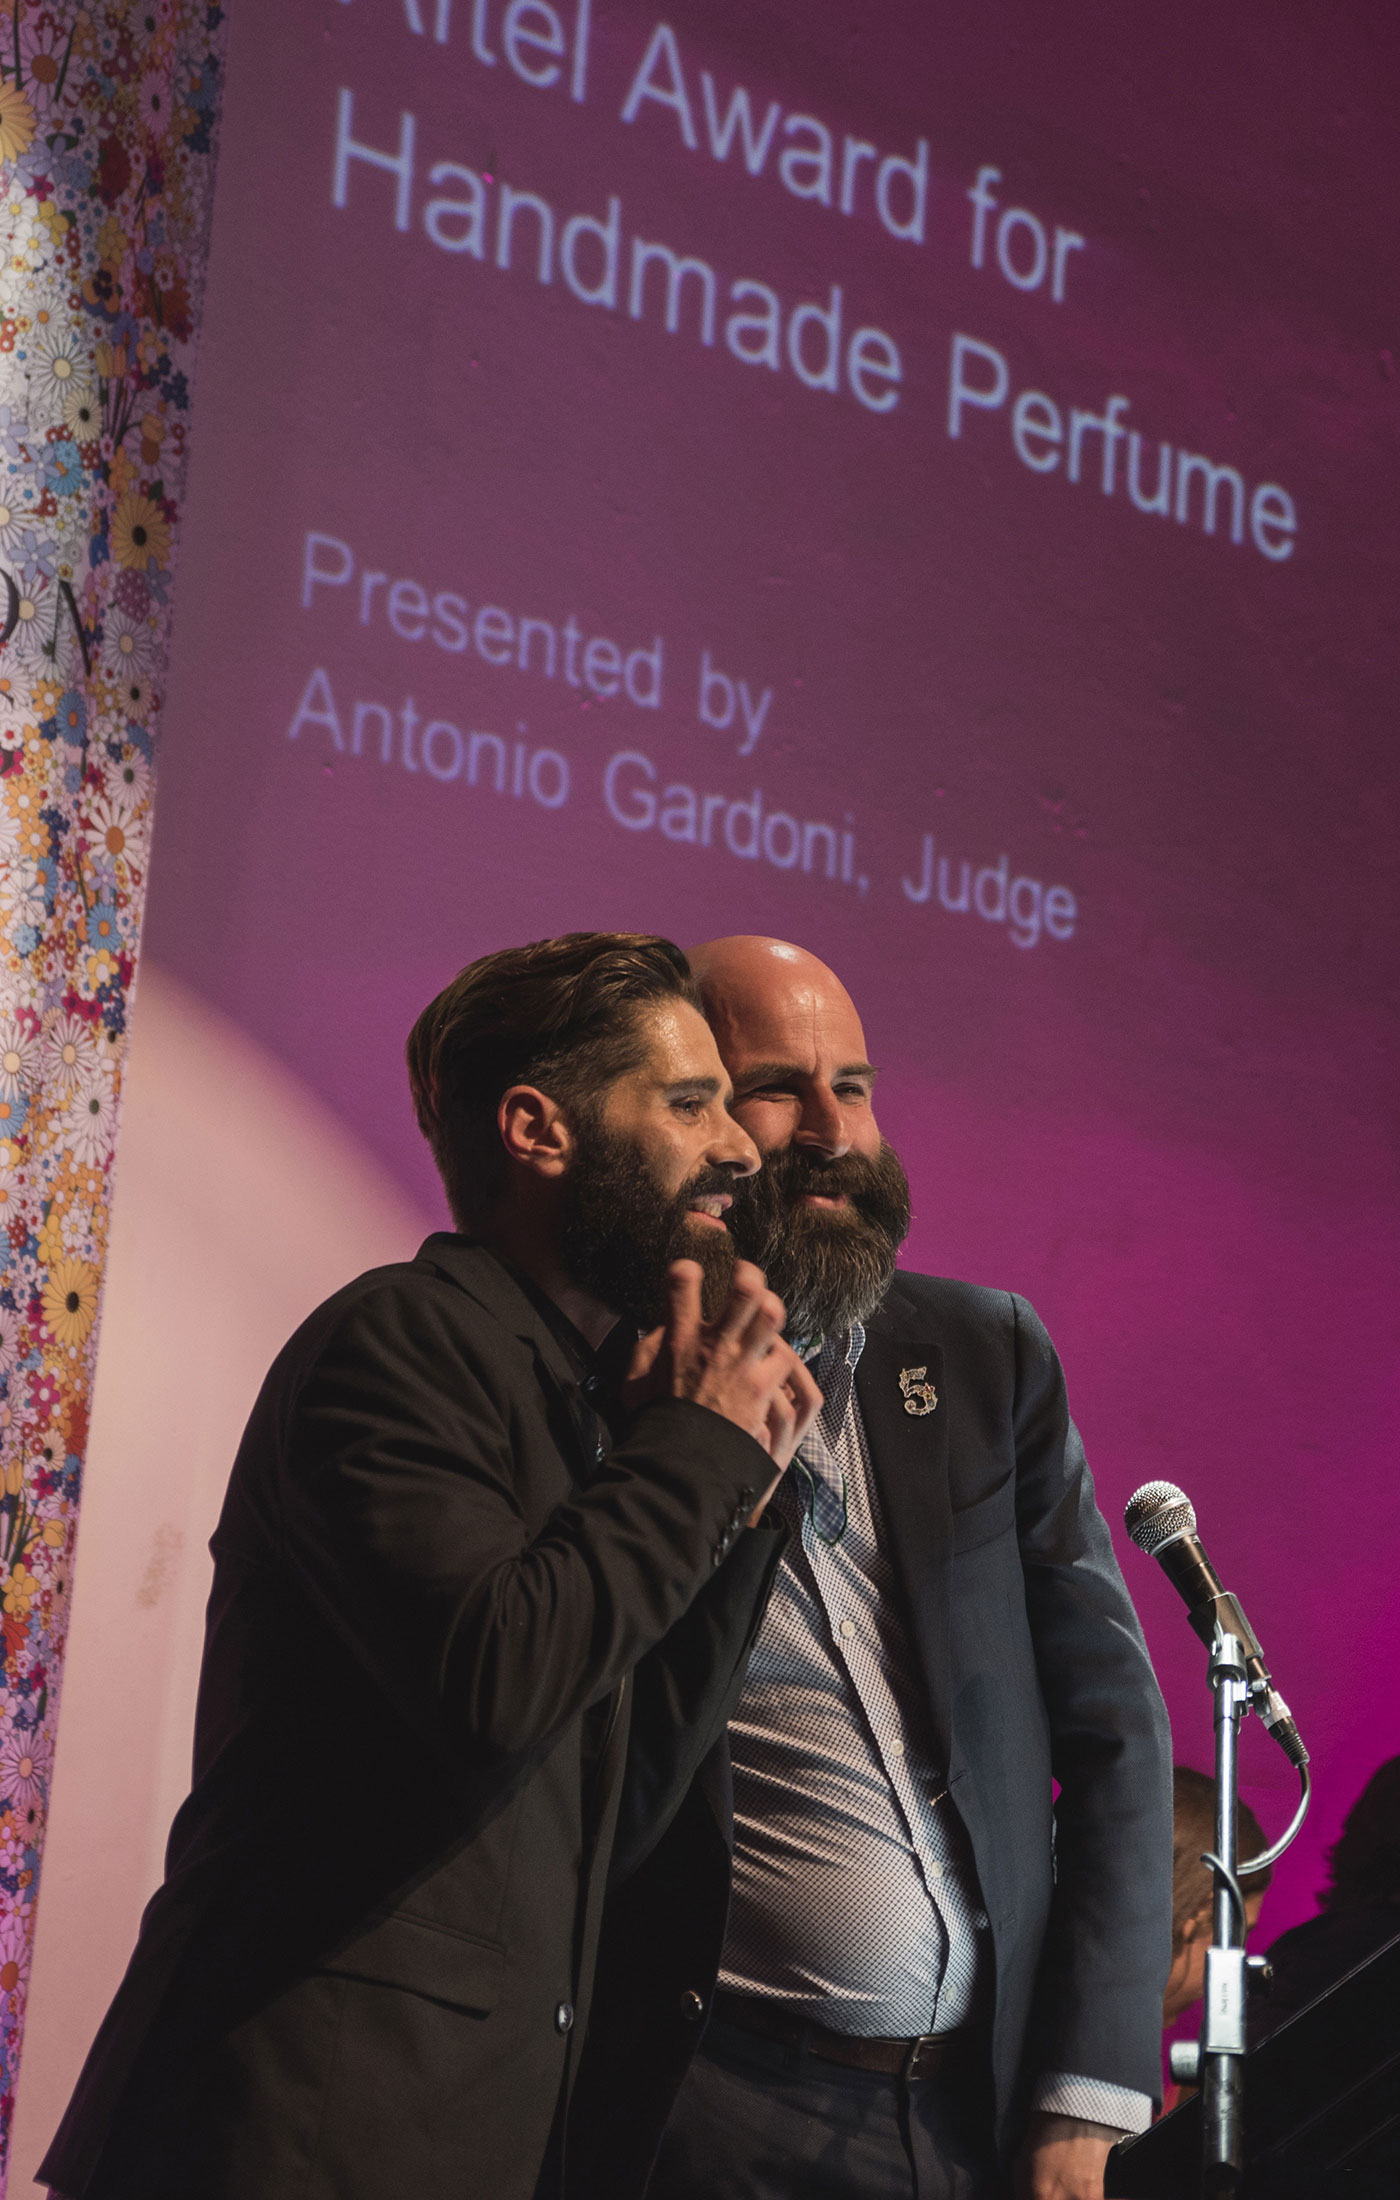 Miguel Matos and Antonio Gardoni at The Art and Olfaction Awards, Photo by Marina Chichi